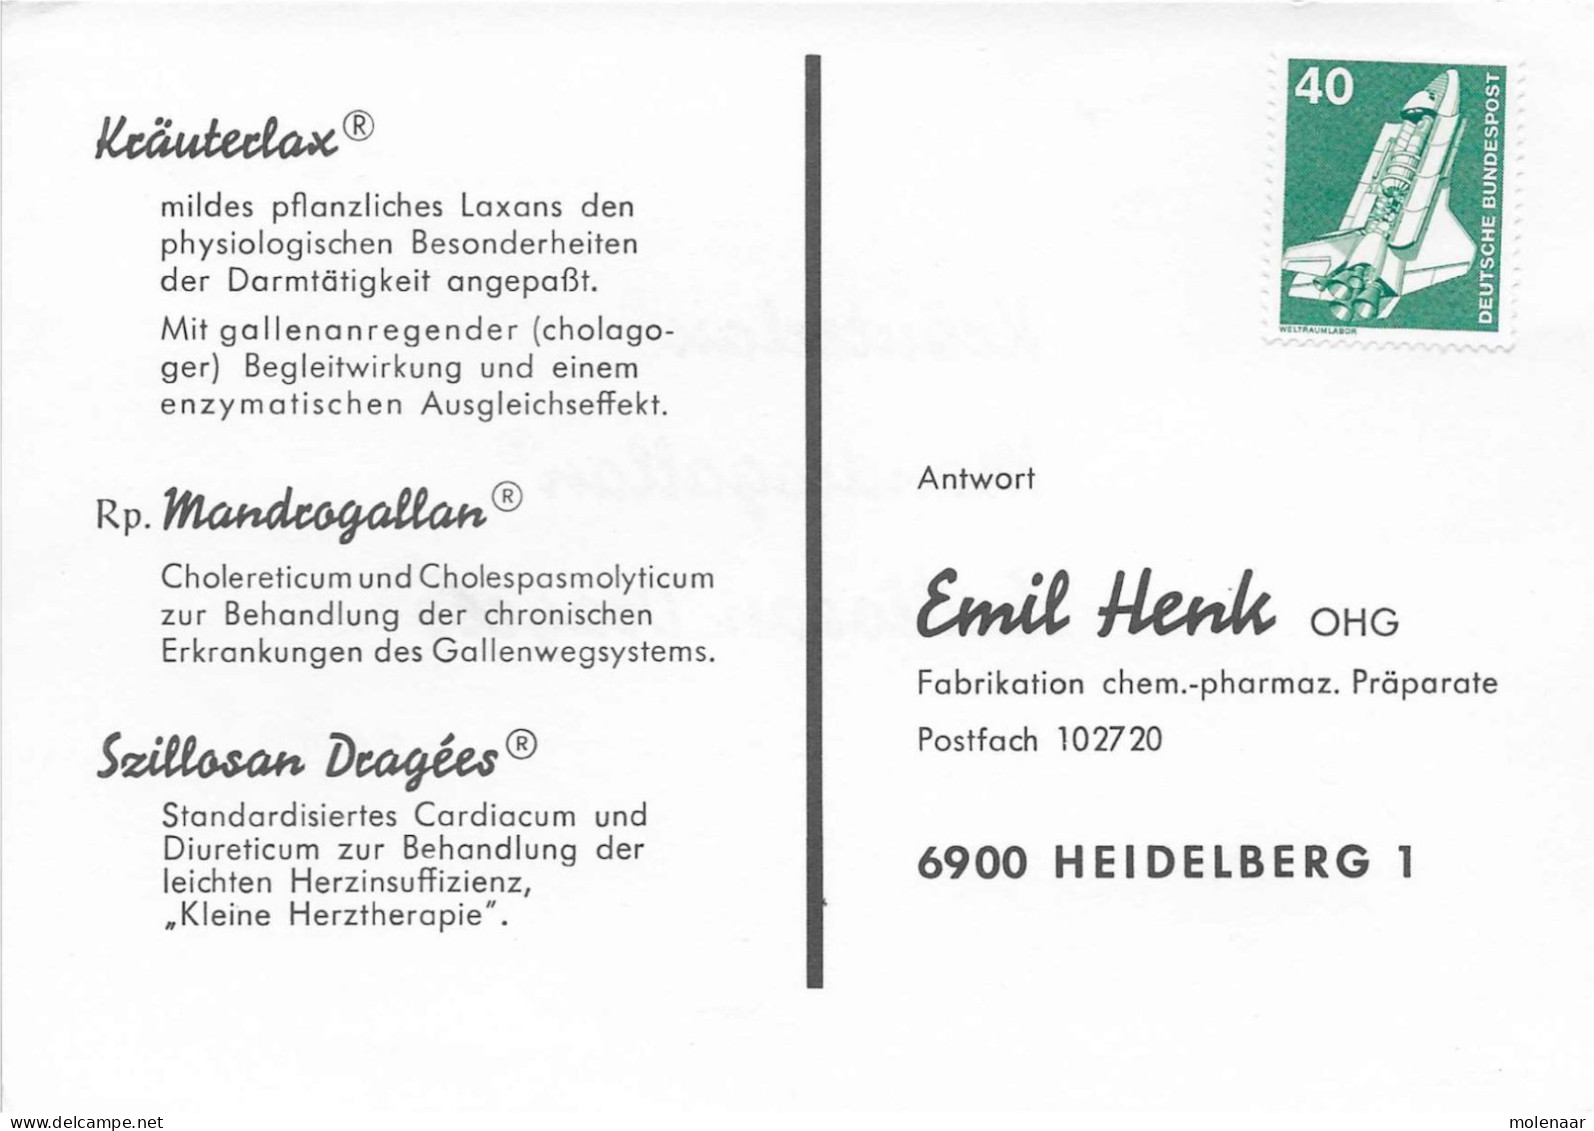 Postzegels > Europa > Duitsland > West-Duitsland > 1970-1979 > Kaart Met No. 850 (17309) - Lettres & Documents